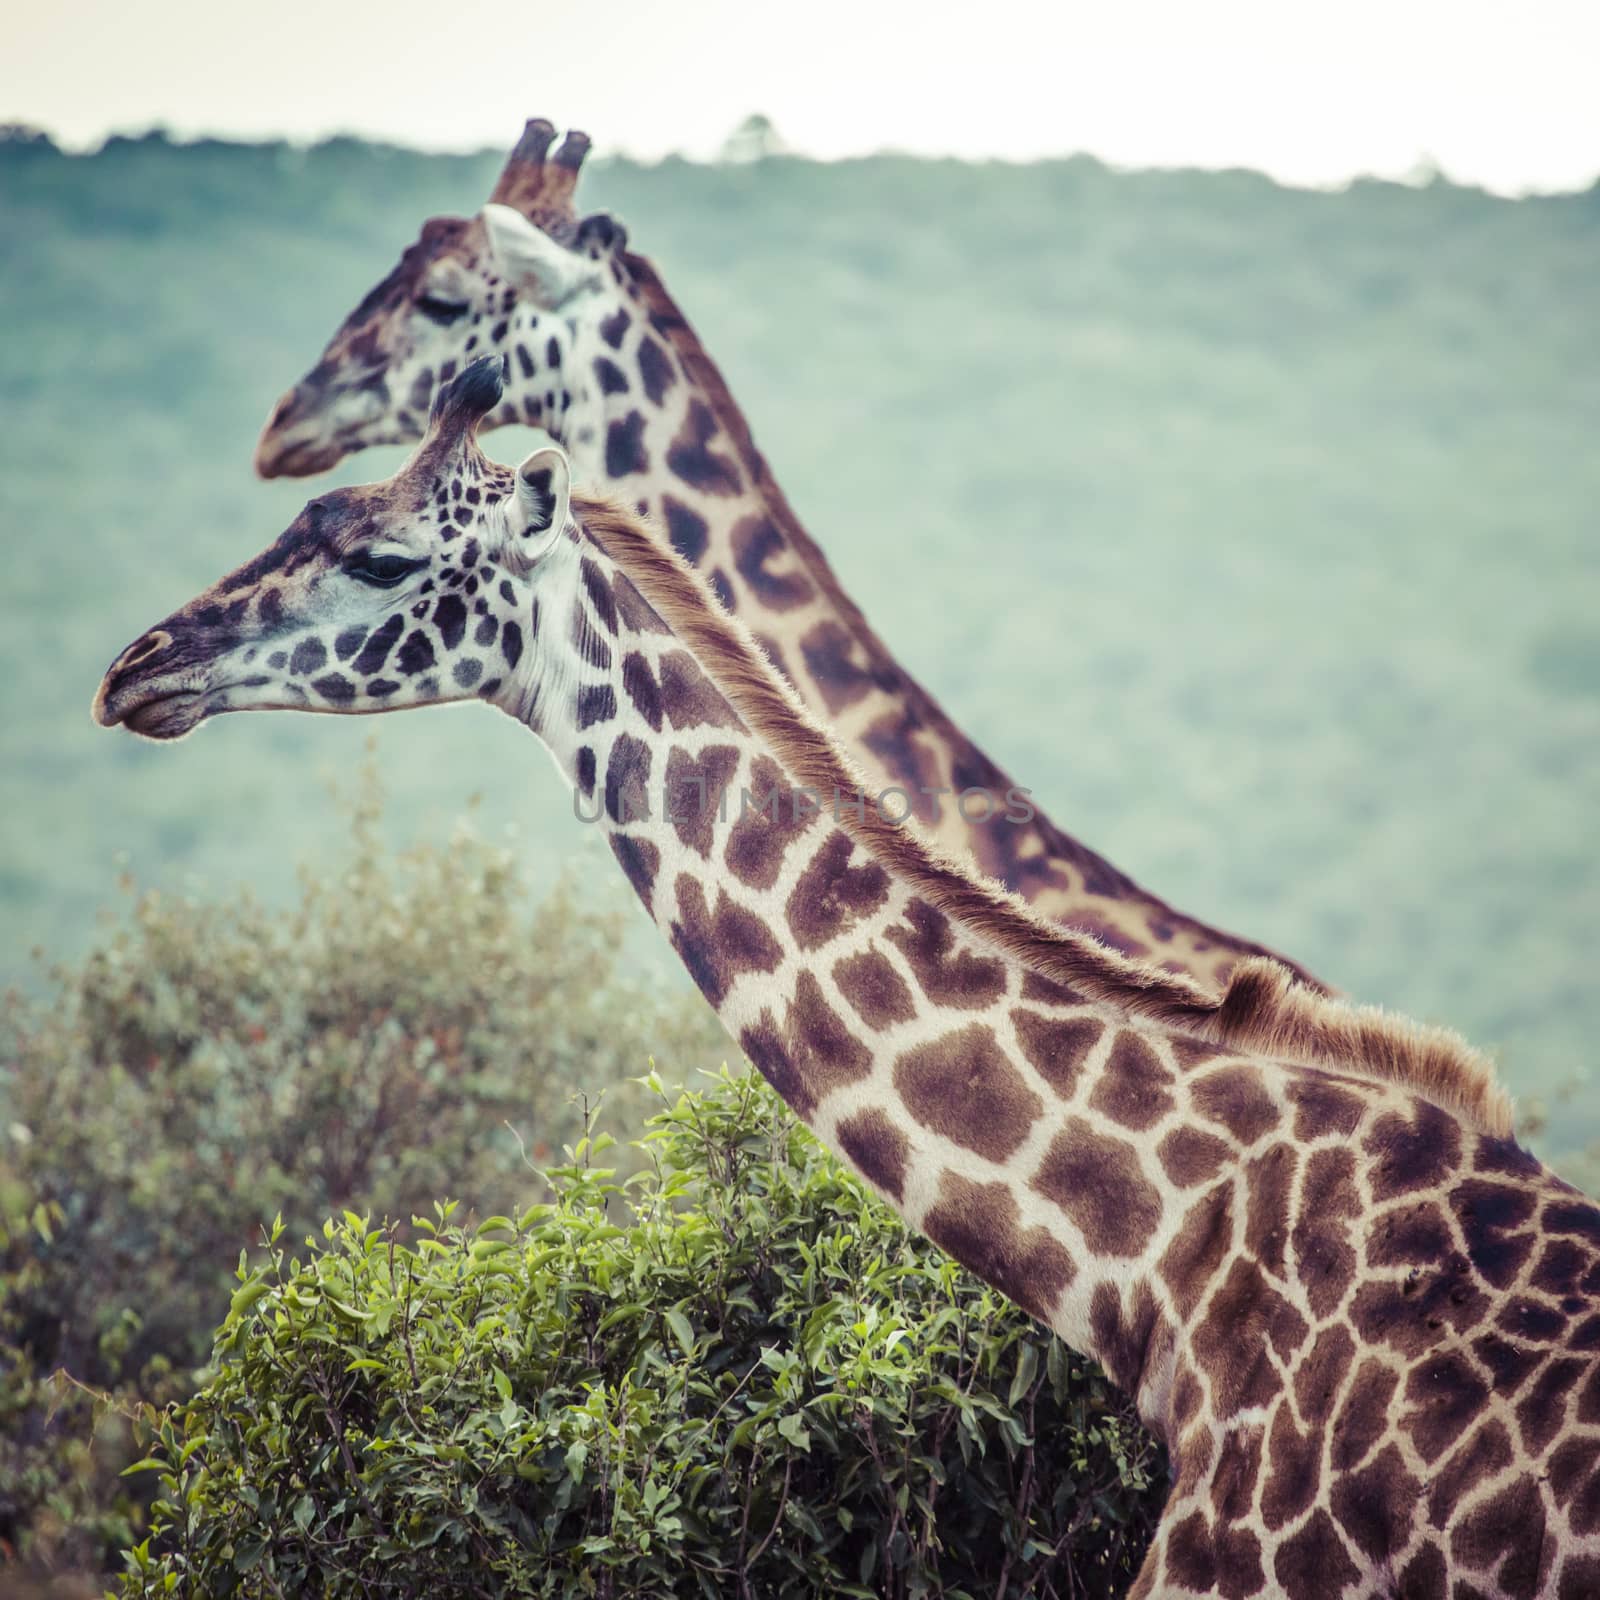 Giraffe on safari wild drive, Kenya. by mariusz_prusaczyk